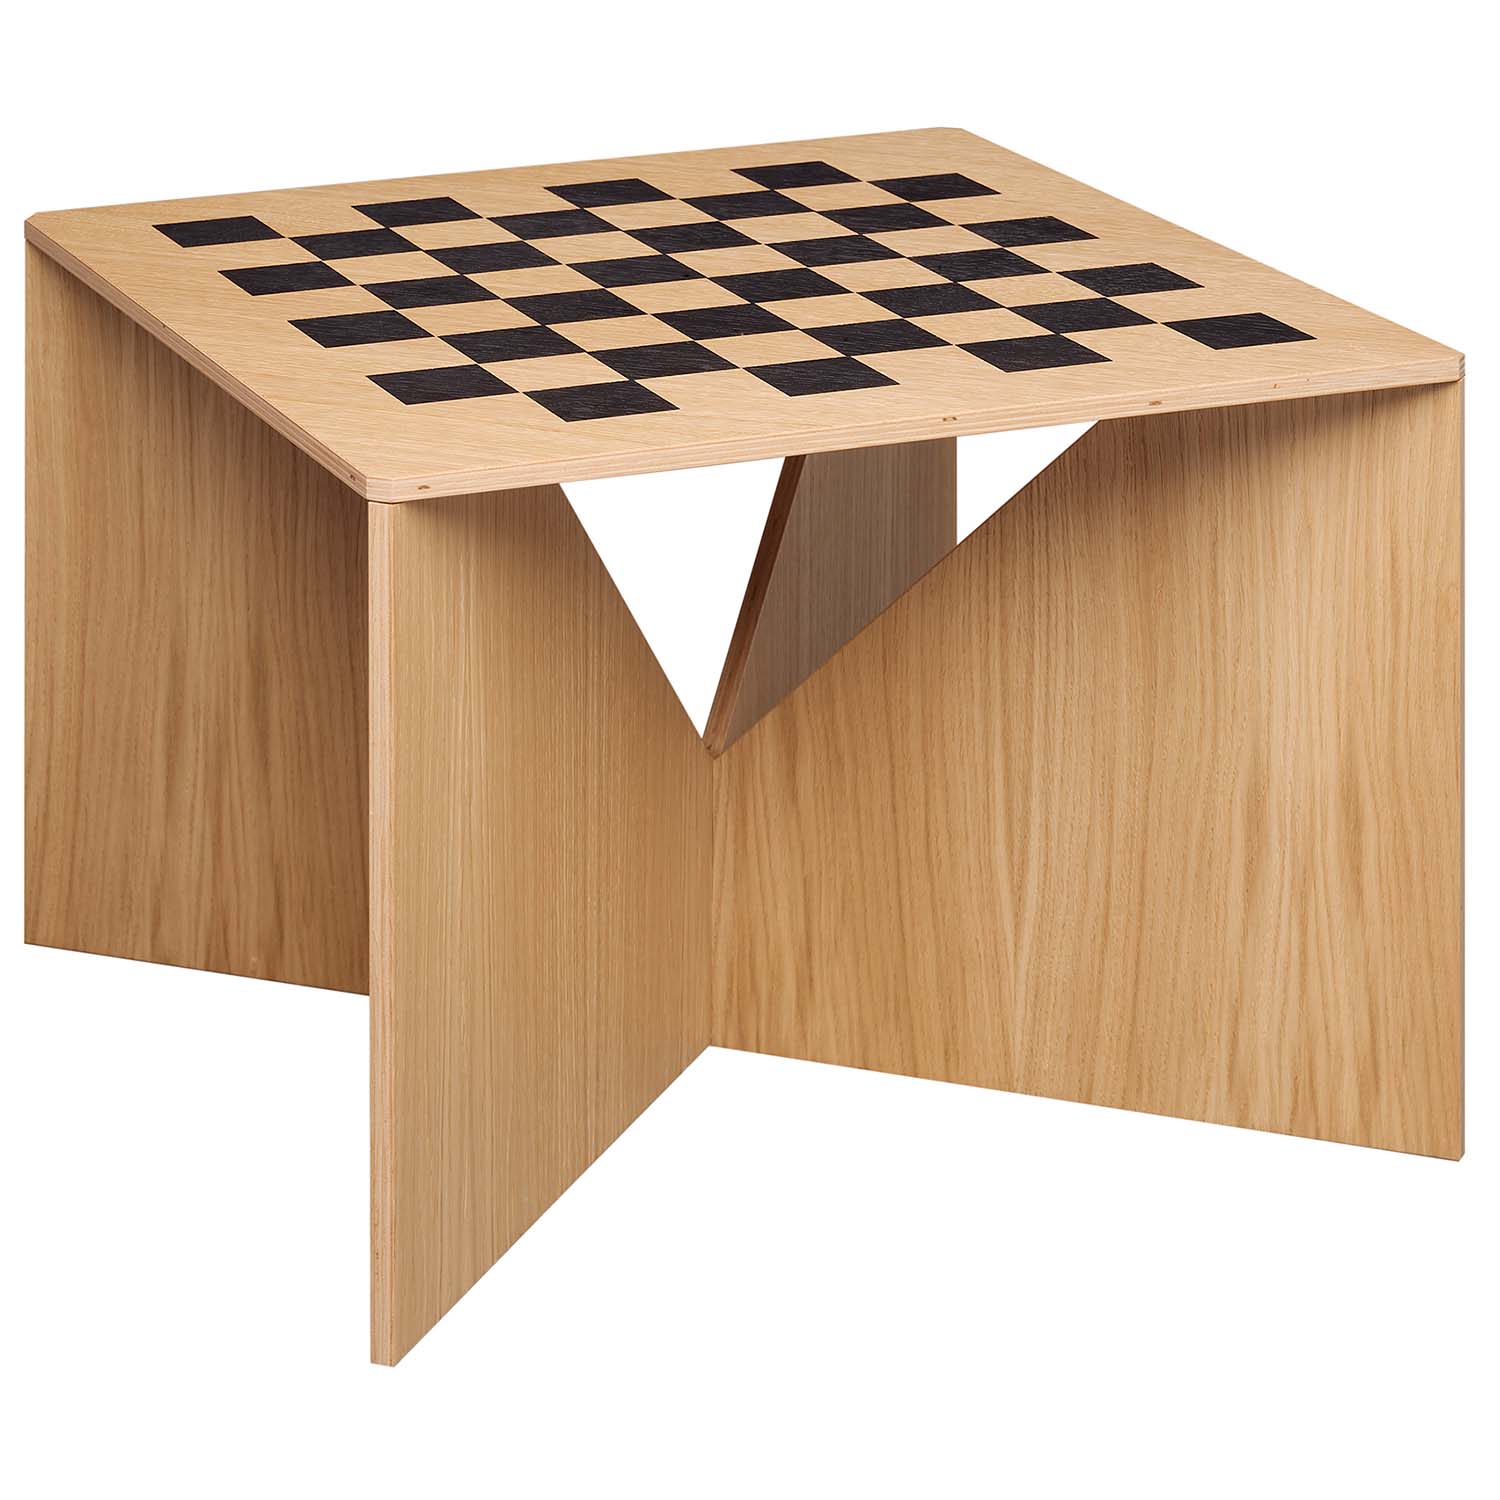 Picture of 칼버트 체스 커피 테이블